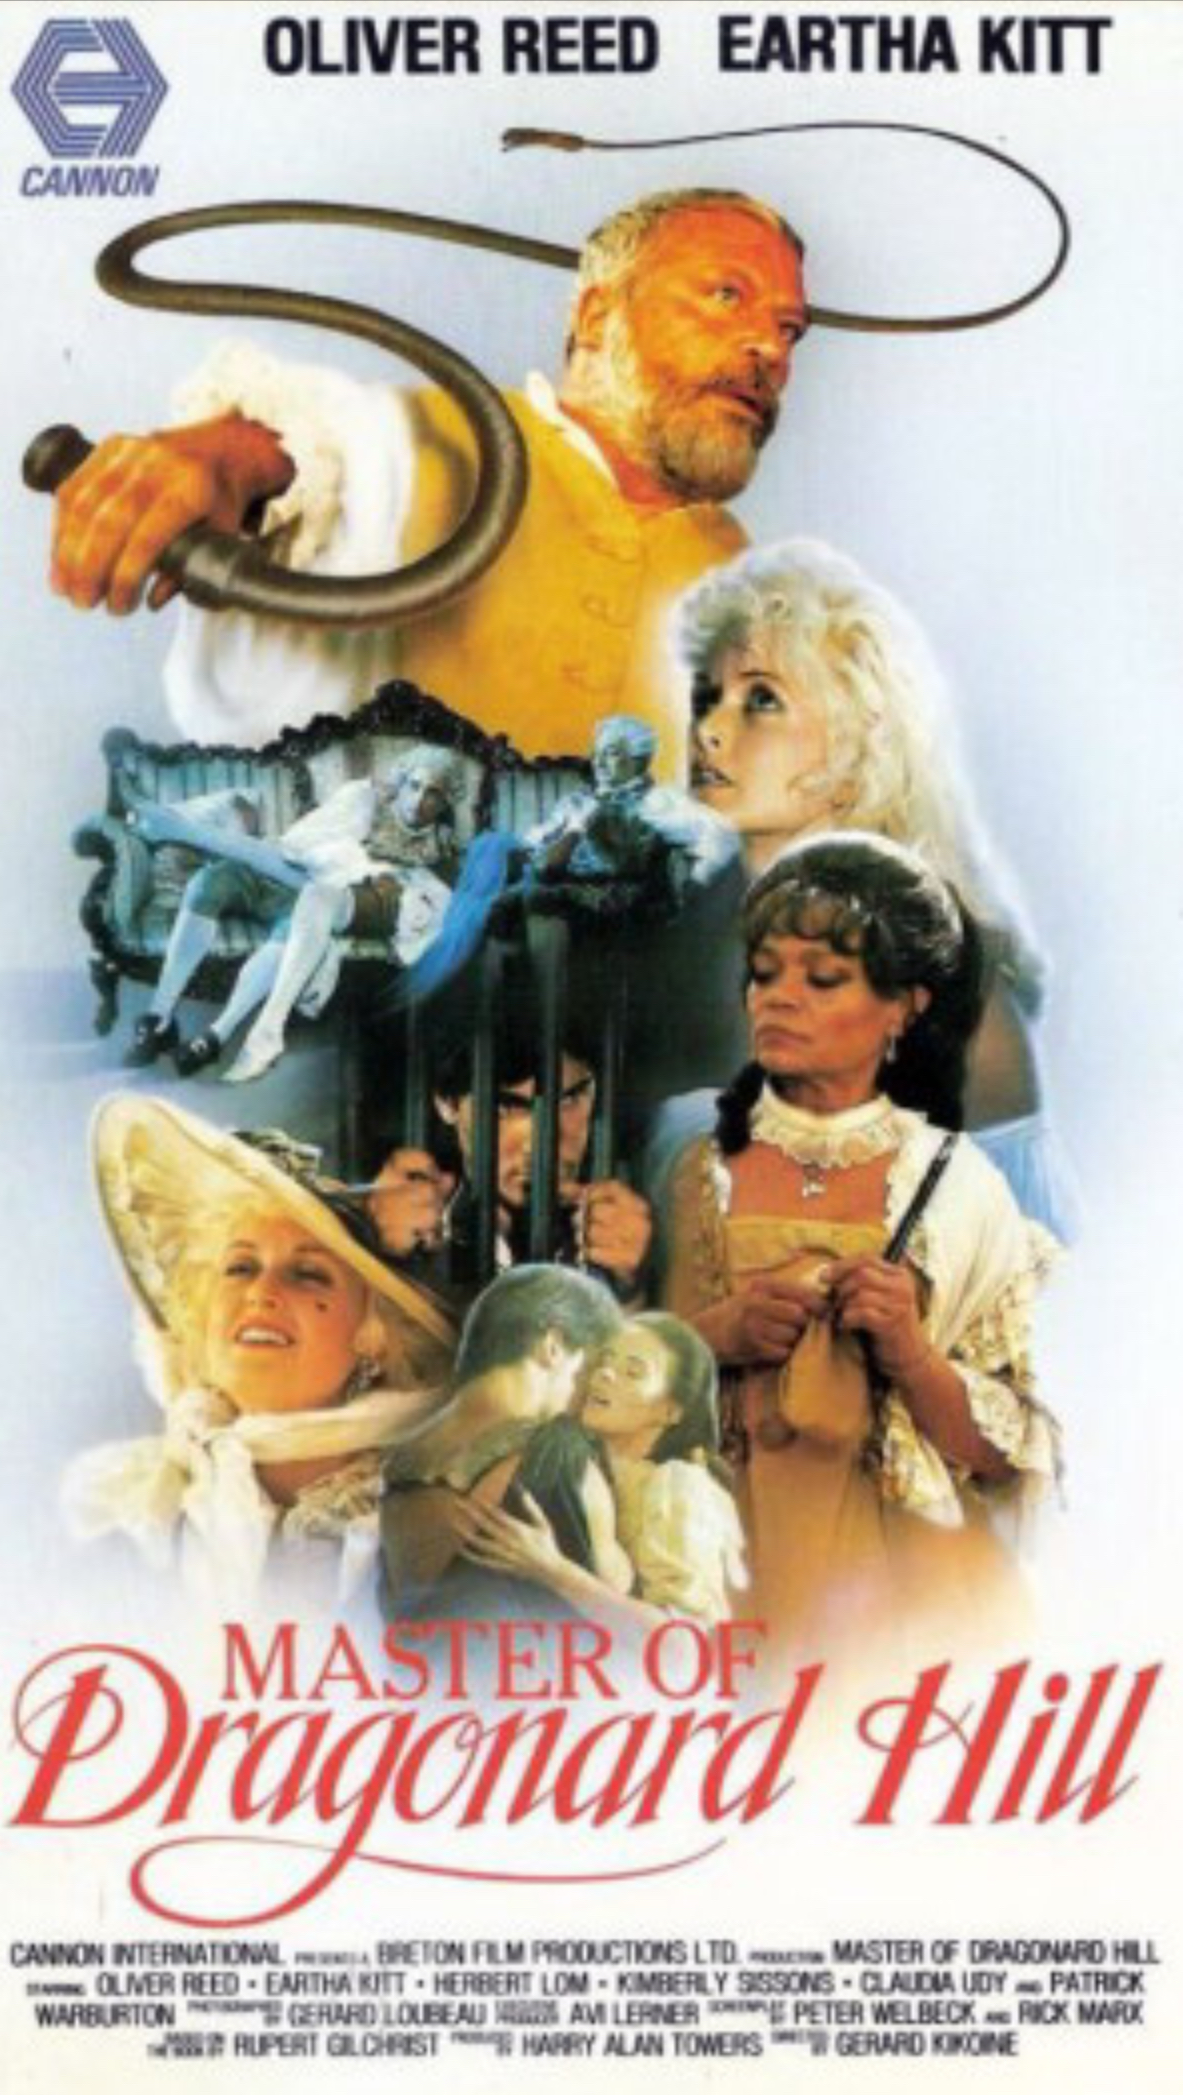 Master of Dragonard Hill (1987) starring Oliver Reed on DVD on DVD